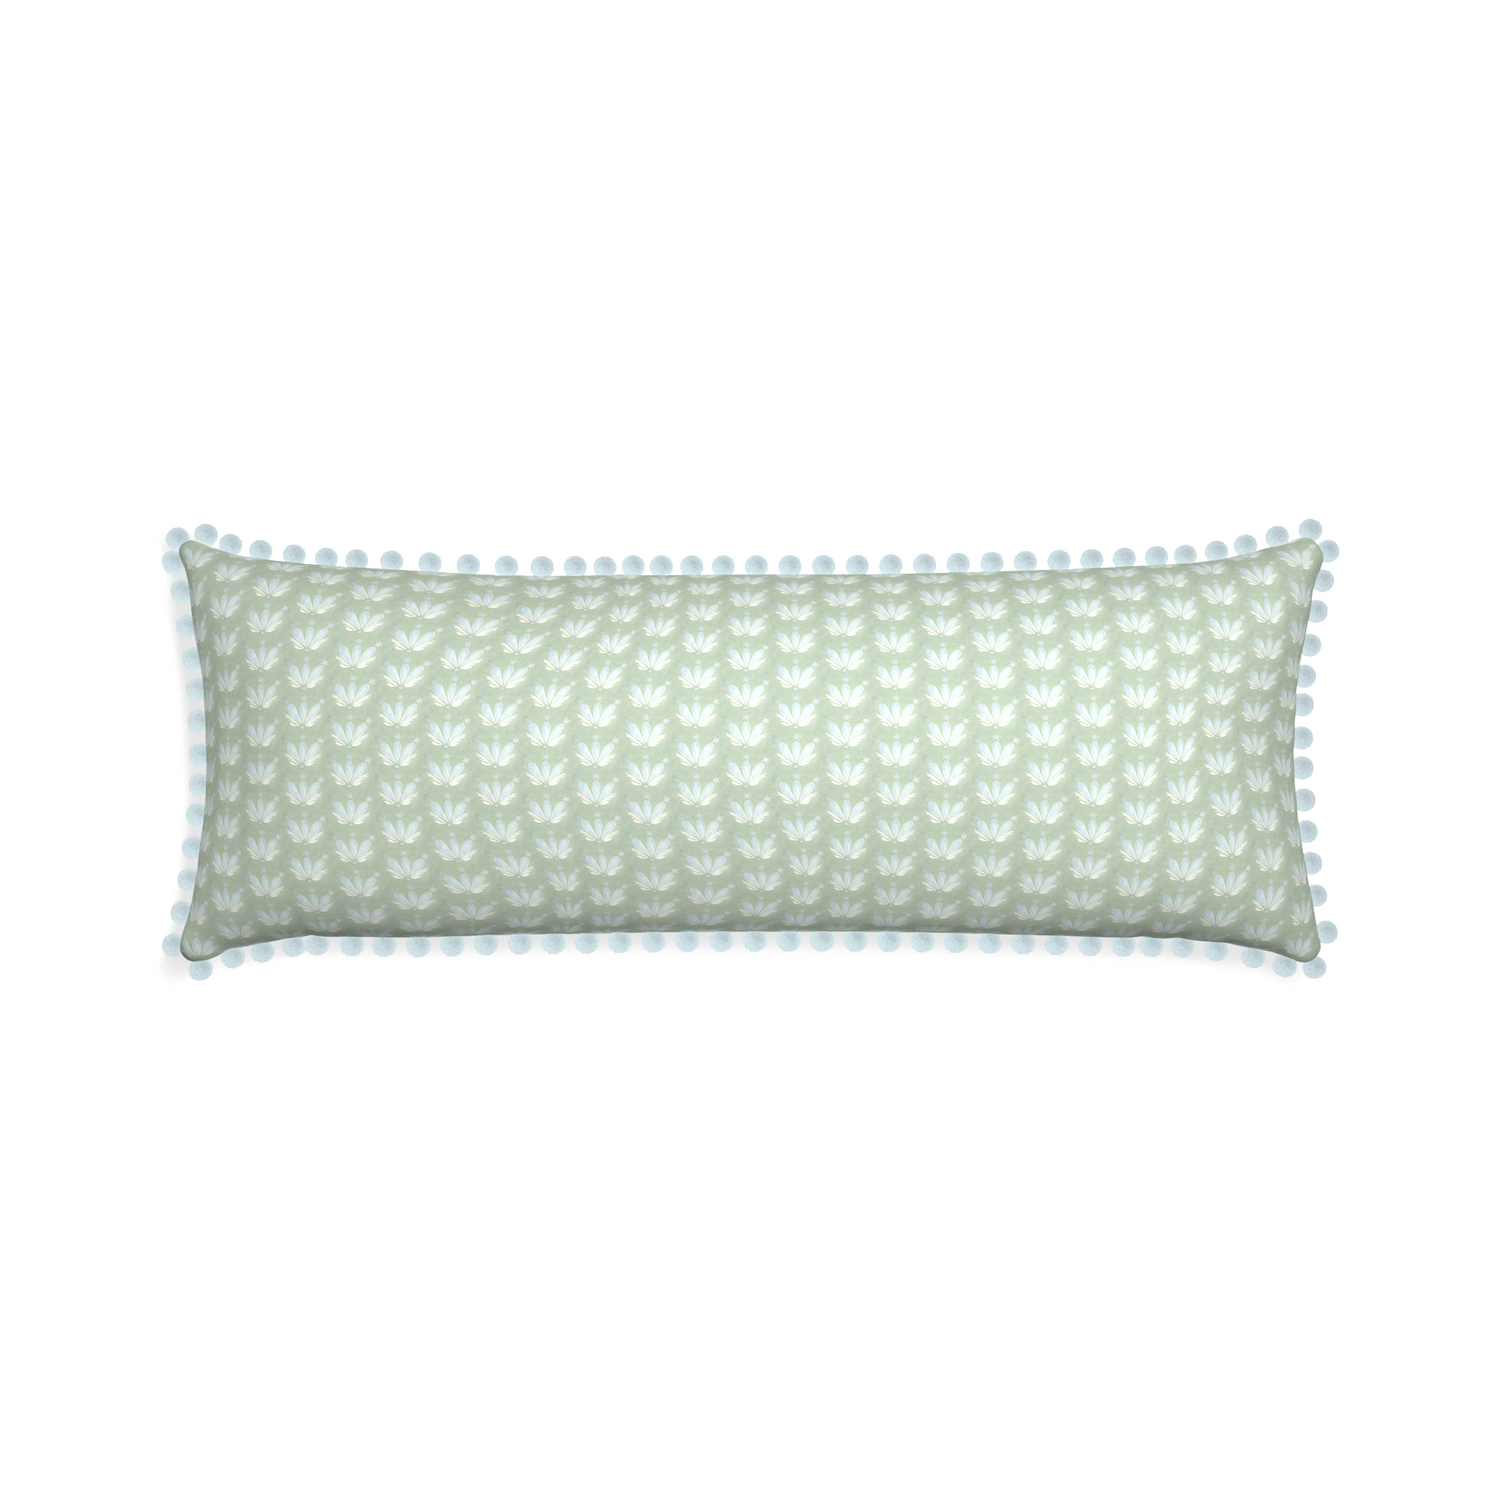 Xl-lumbar serena sea salt custom pillow with powder pom pom on white background